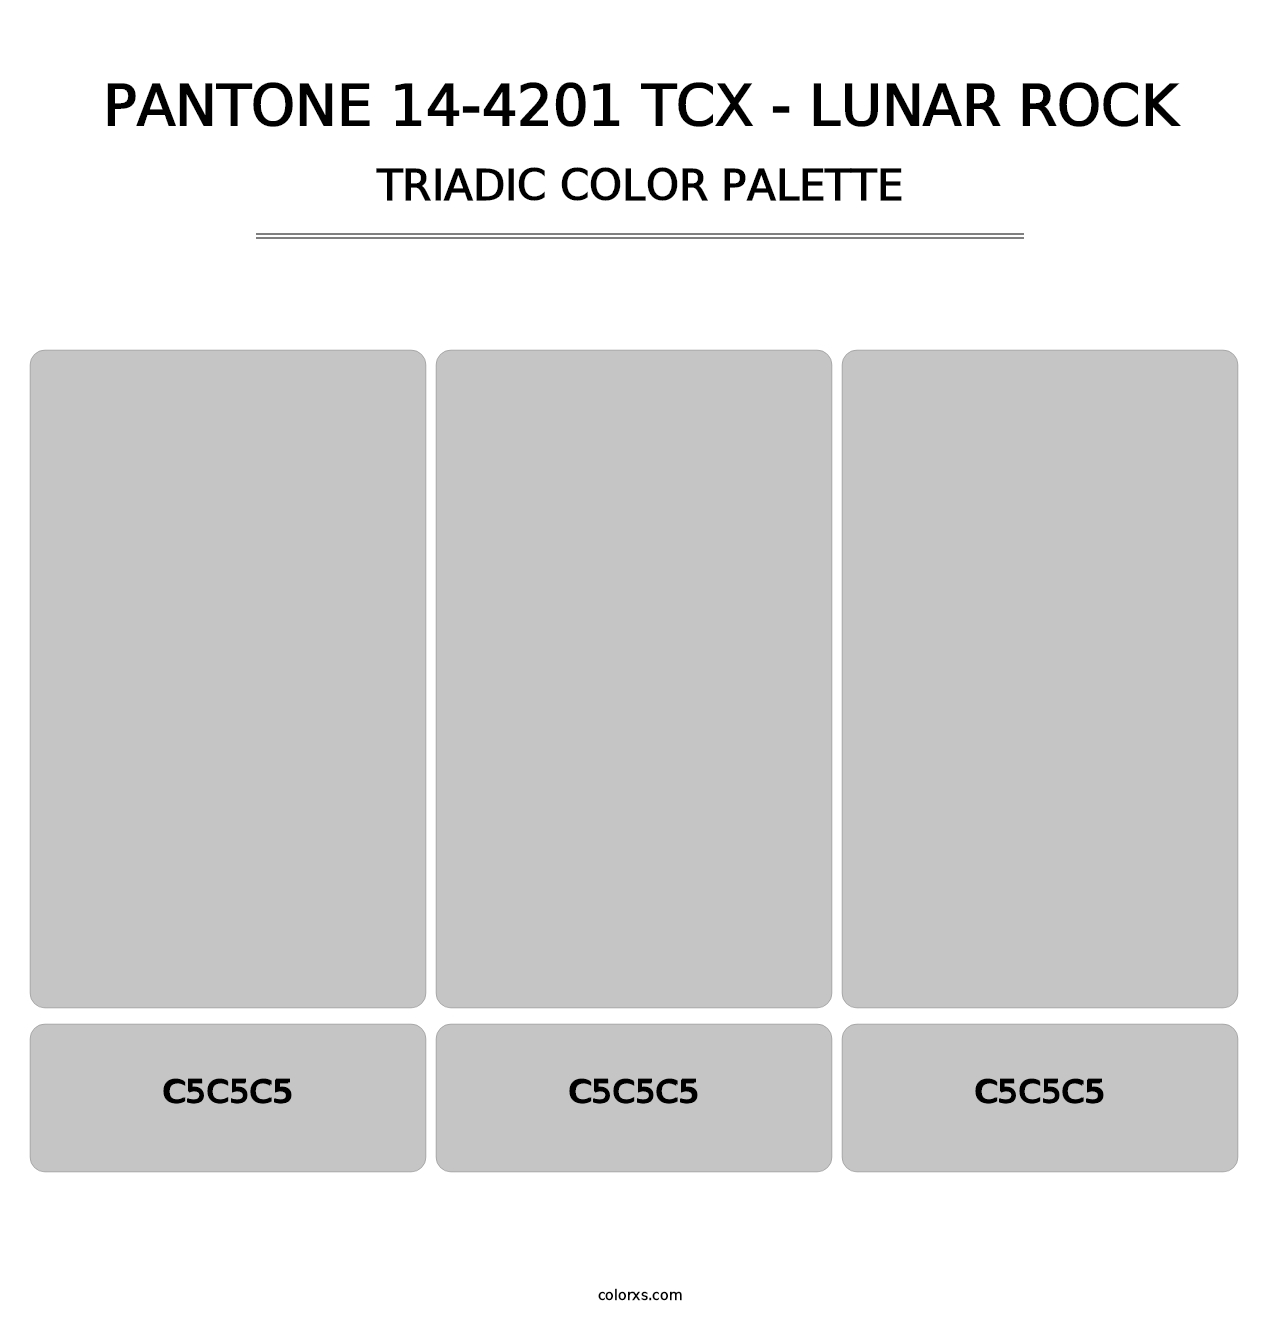 PANTONE 14-4201 TCX - Lunar Rock - Triadic Color Palette